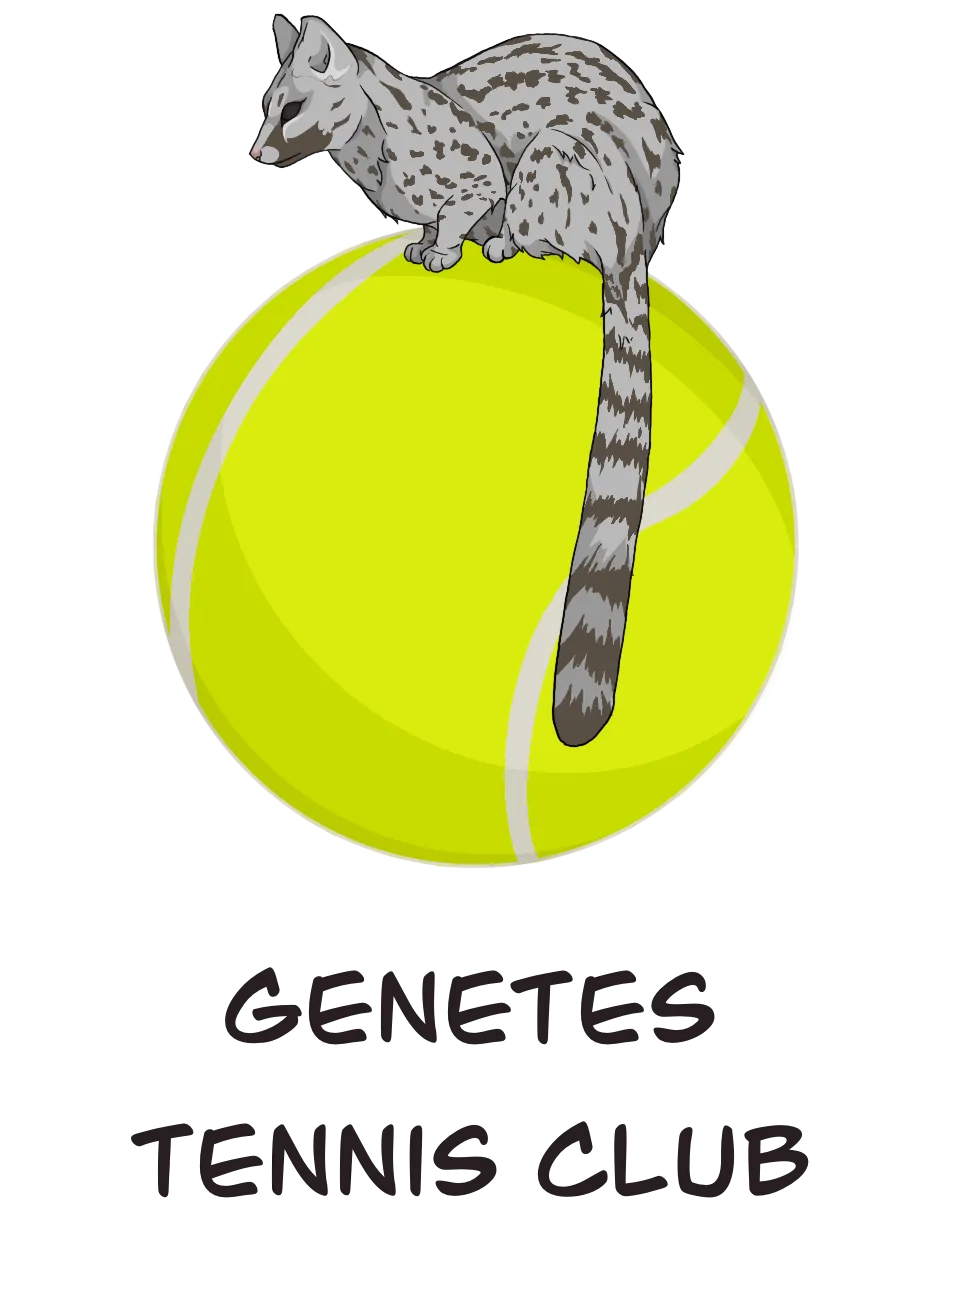 Genetes Tennis Club